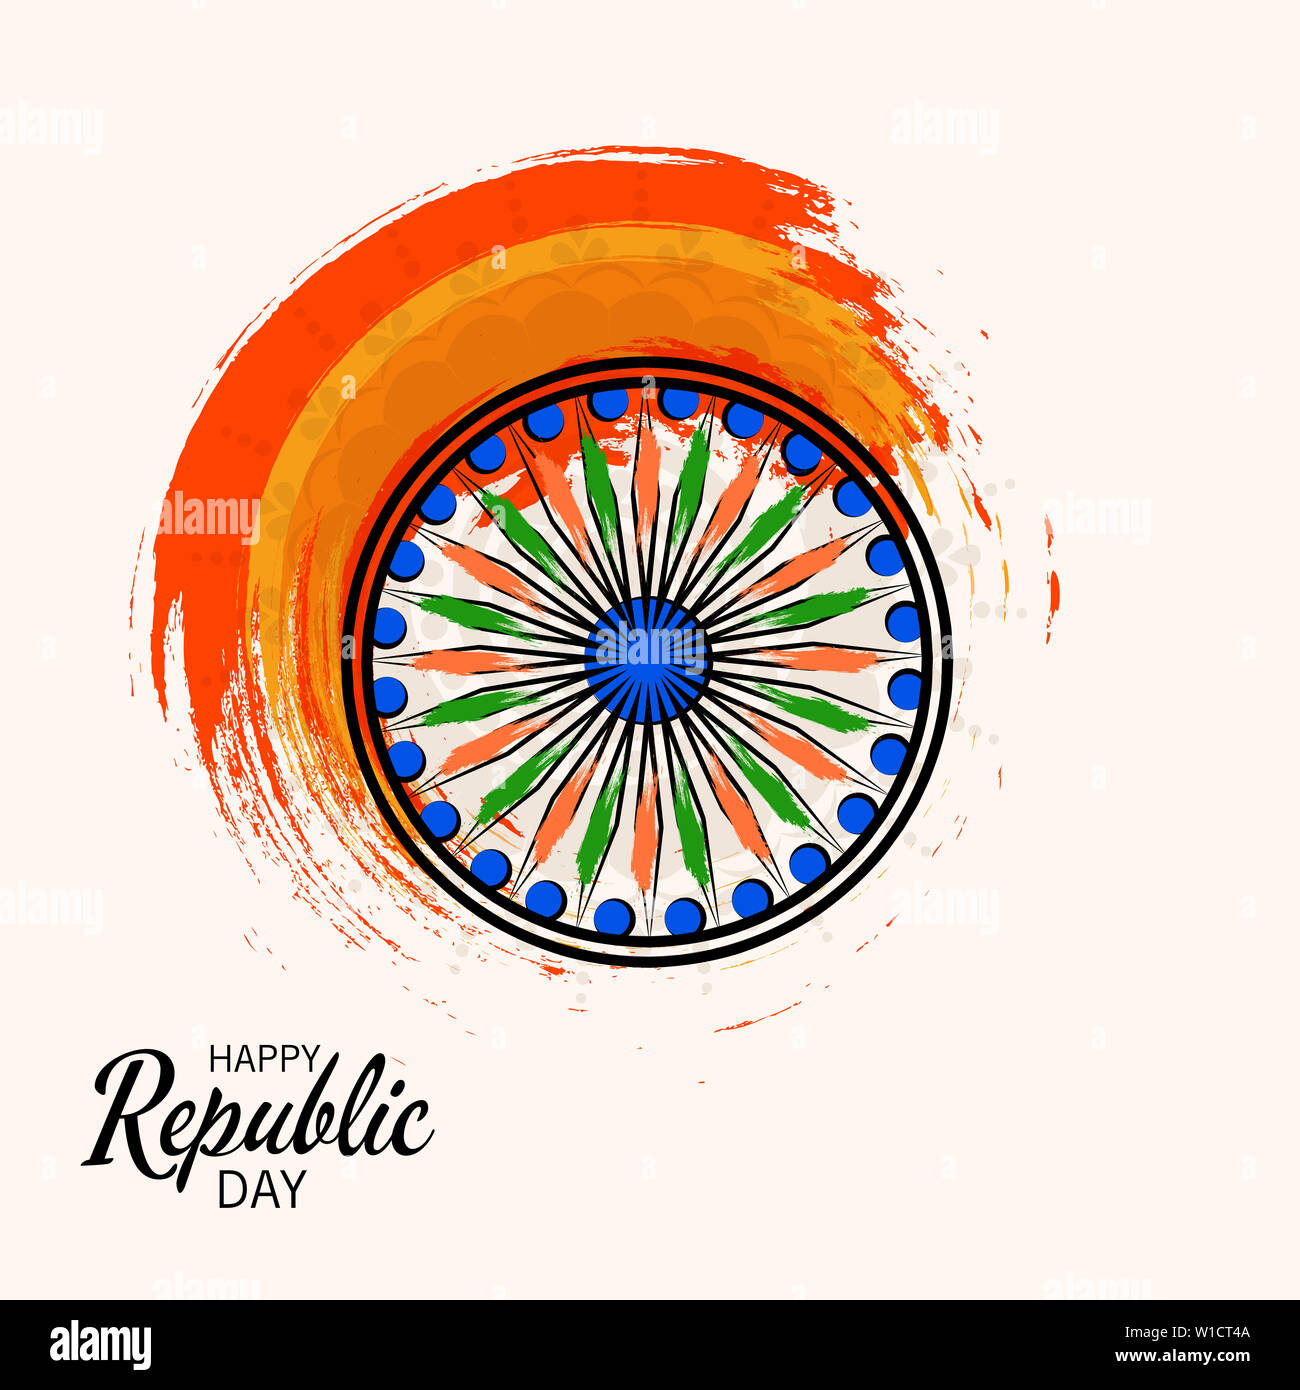 26 january republic day concept - india gate Vector Image-saigonsouth.com.vn